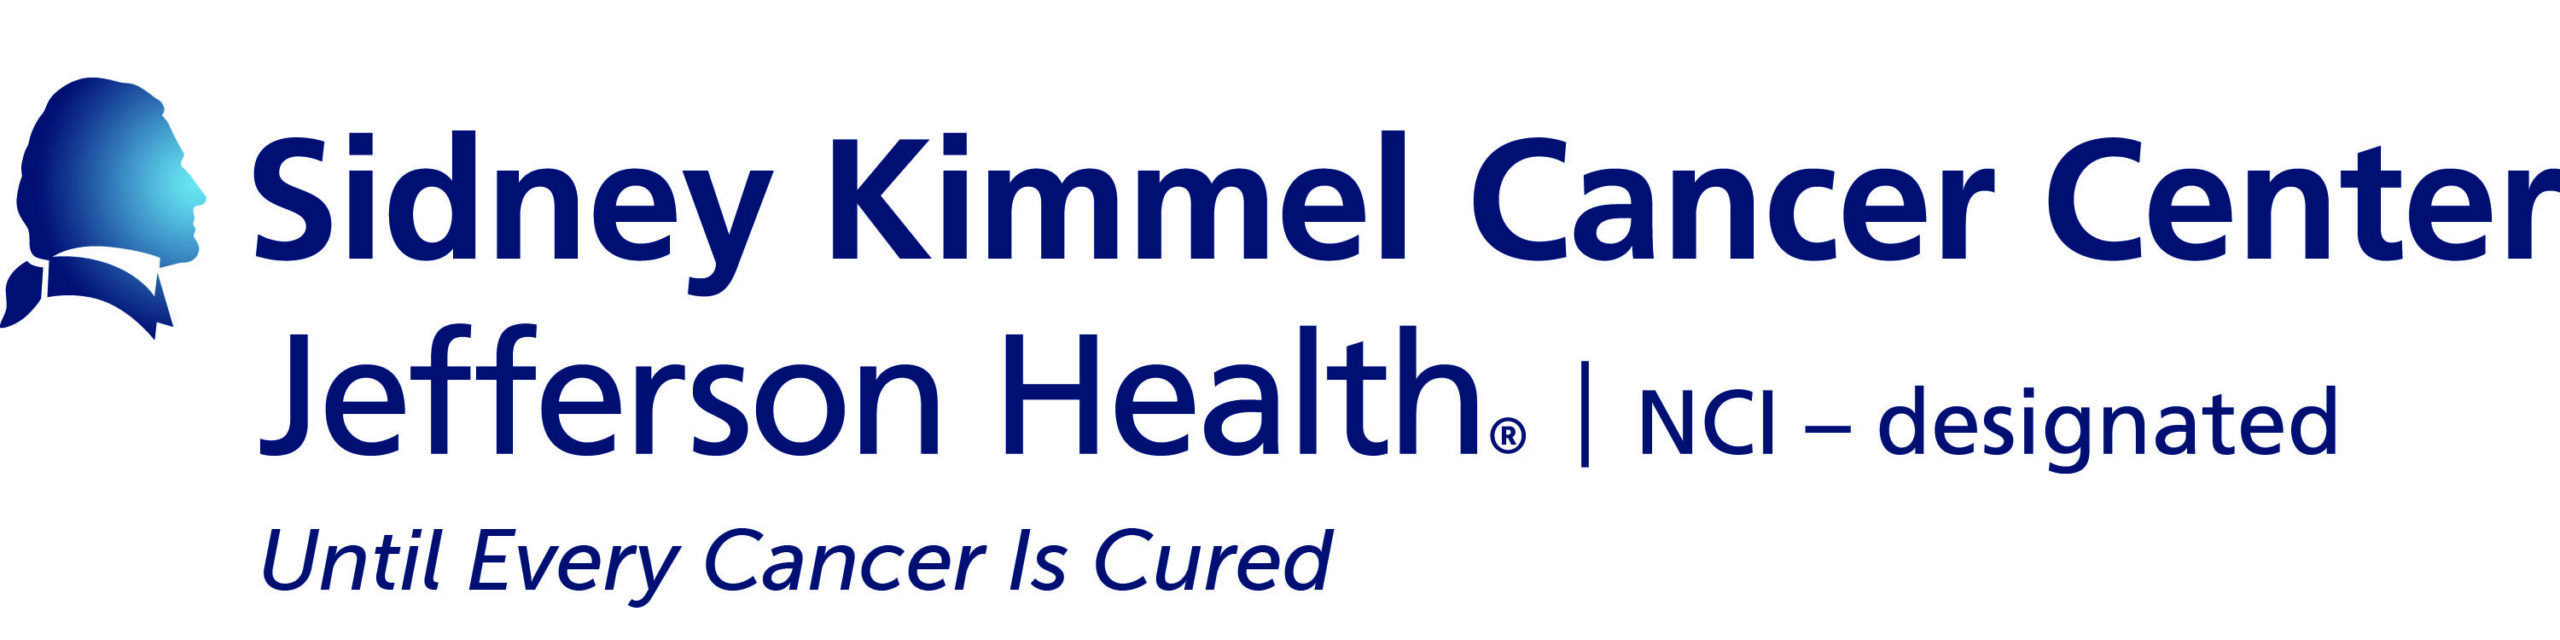 Sidney Kimmel Cancer Center